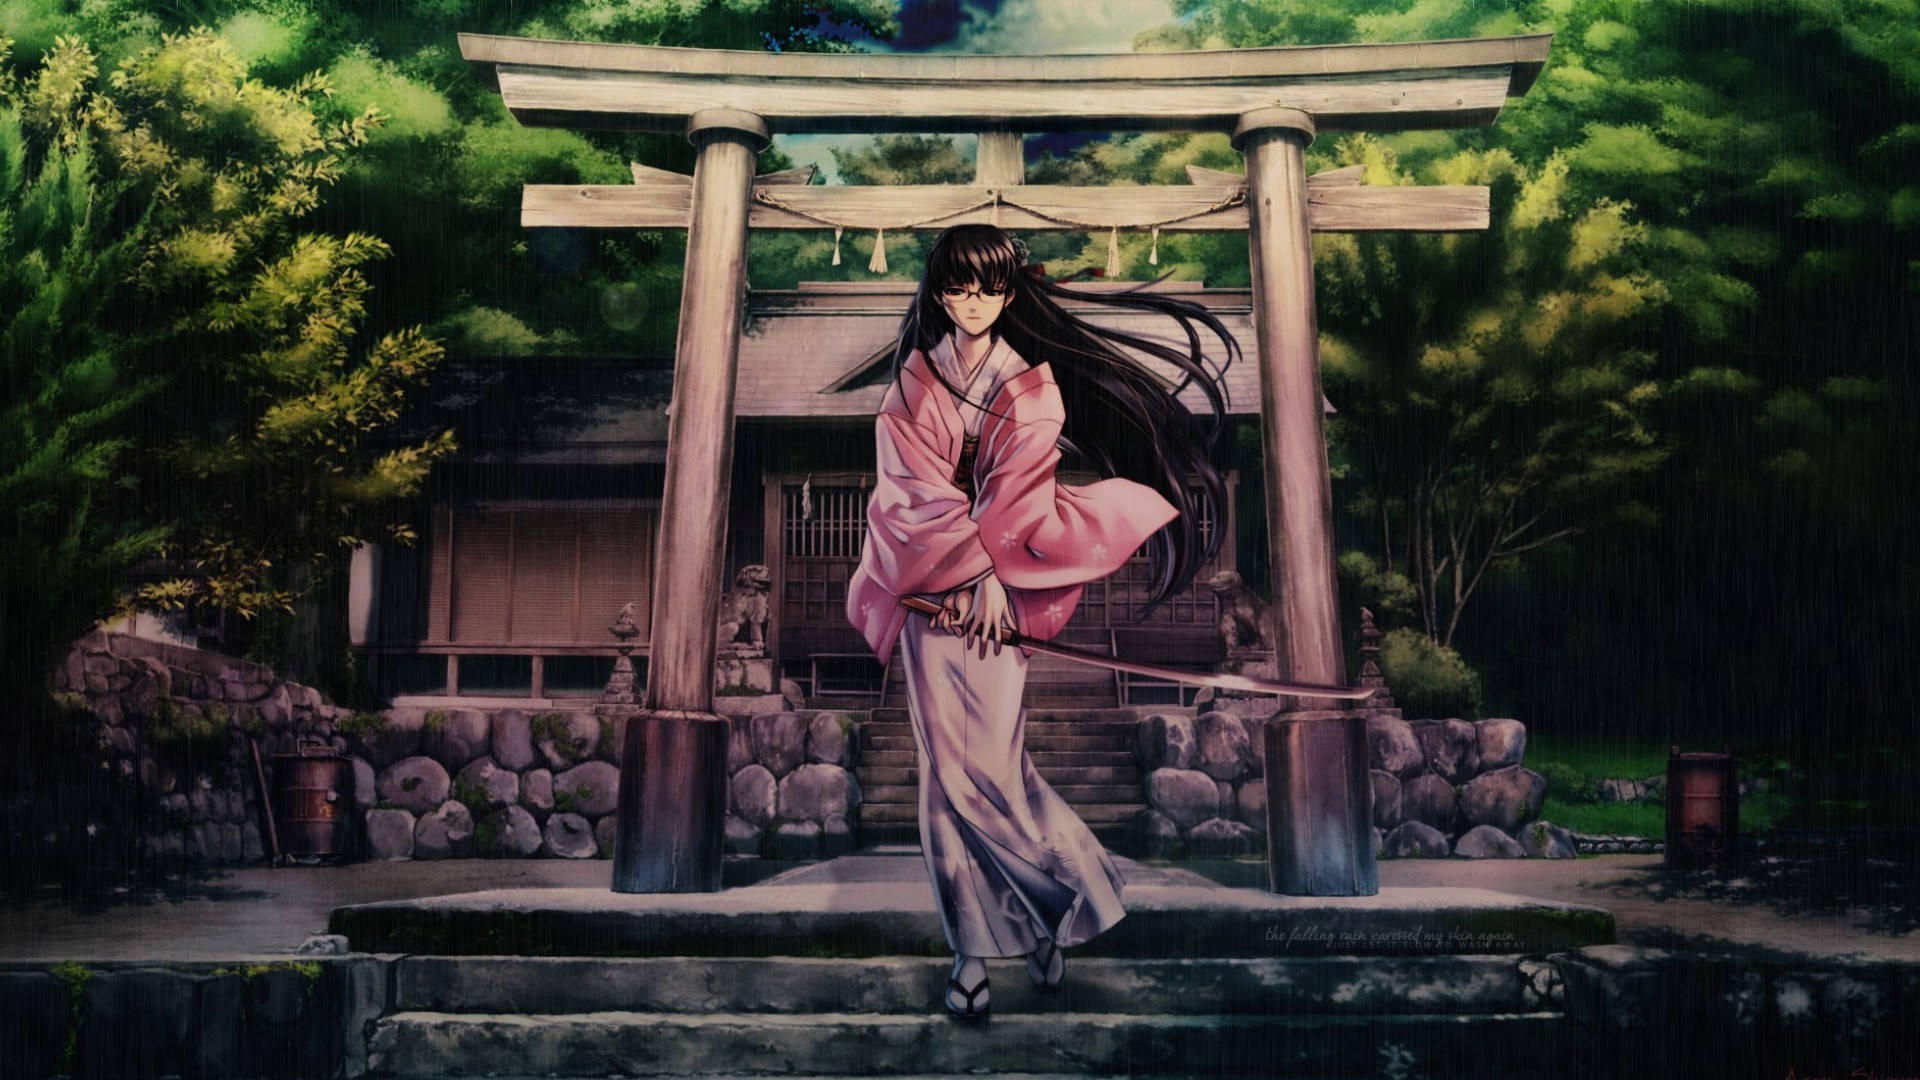 Anime 1920x1080 anime Black Lagoon anime girls sword katana Asia temple fantasy art fantasy girl weapon long hair women with swords